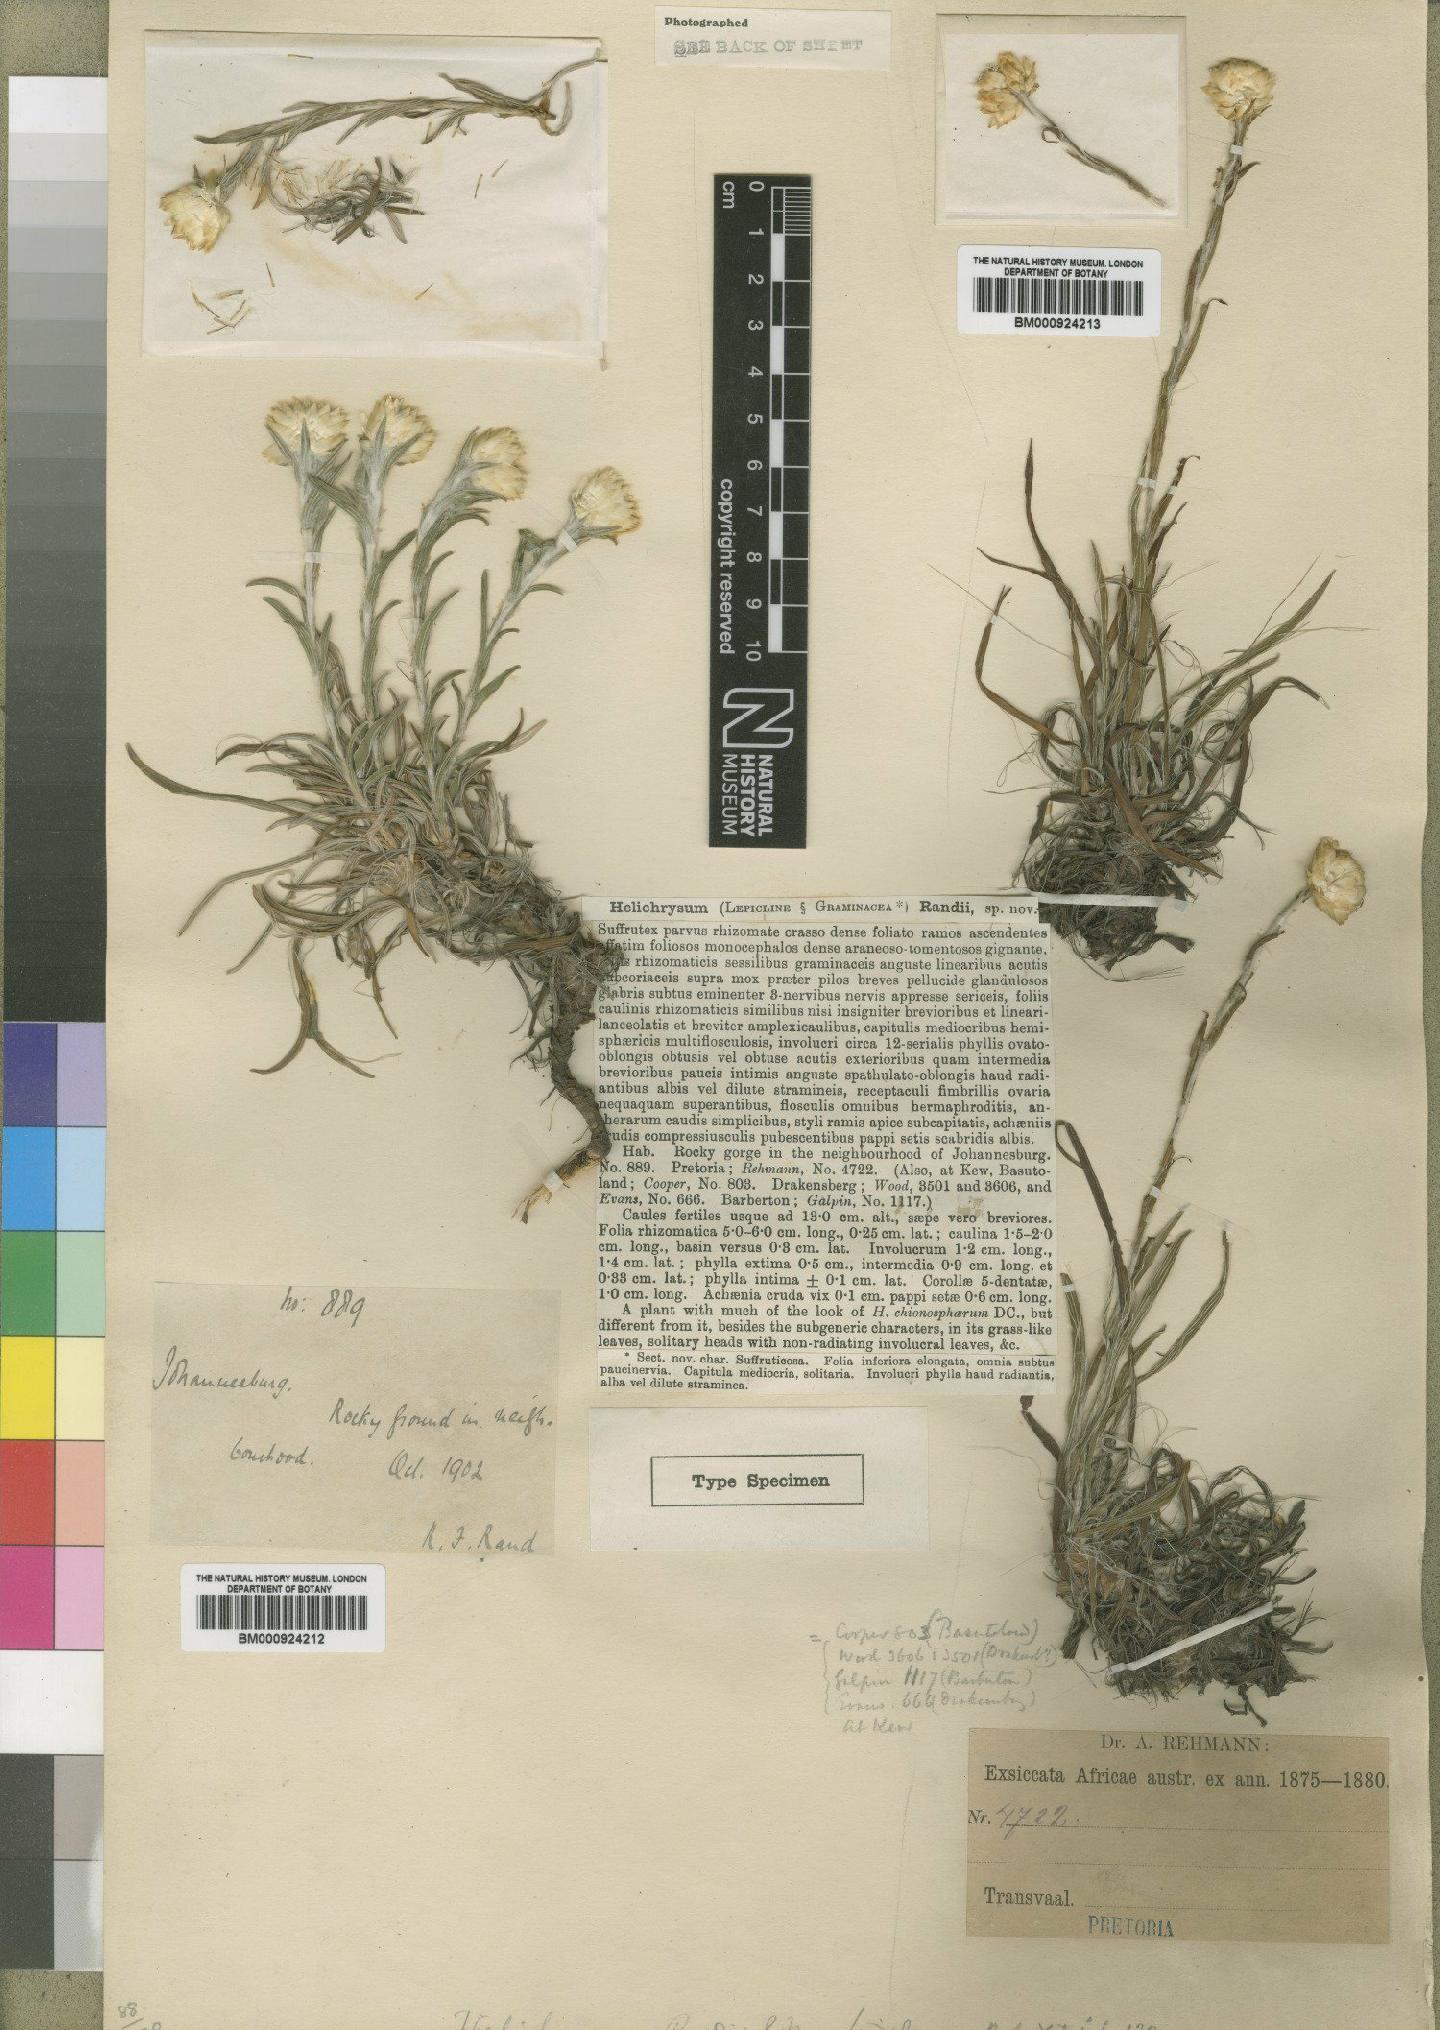 To NHMUK collection (Helichrysum chionosphaerum DC.; Syntype; NHMUK:ecatalogue:4529241)